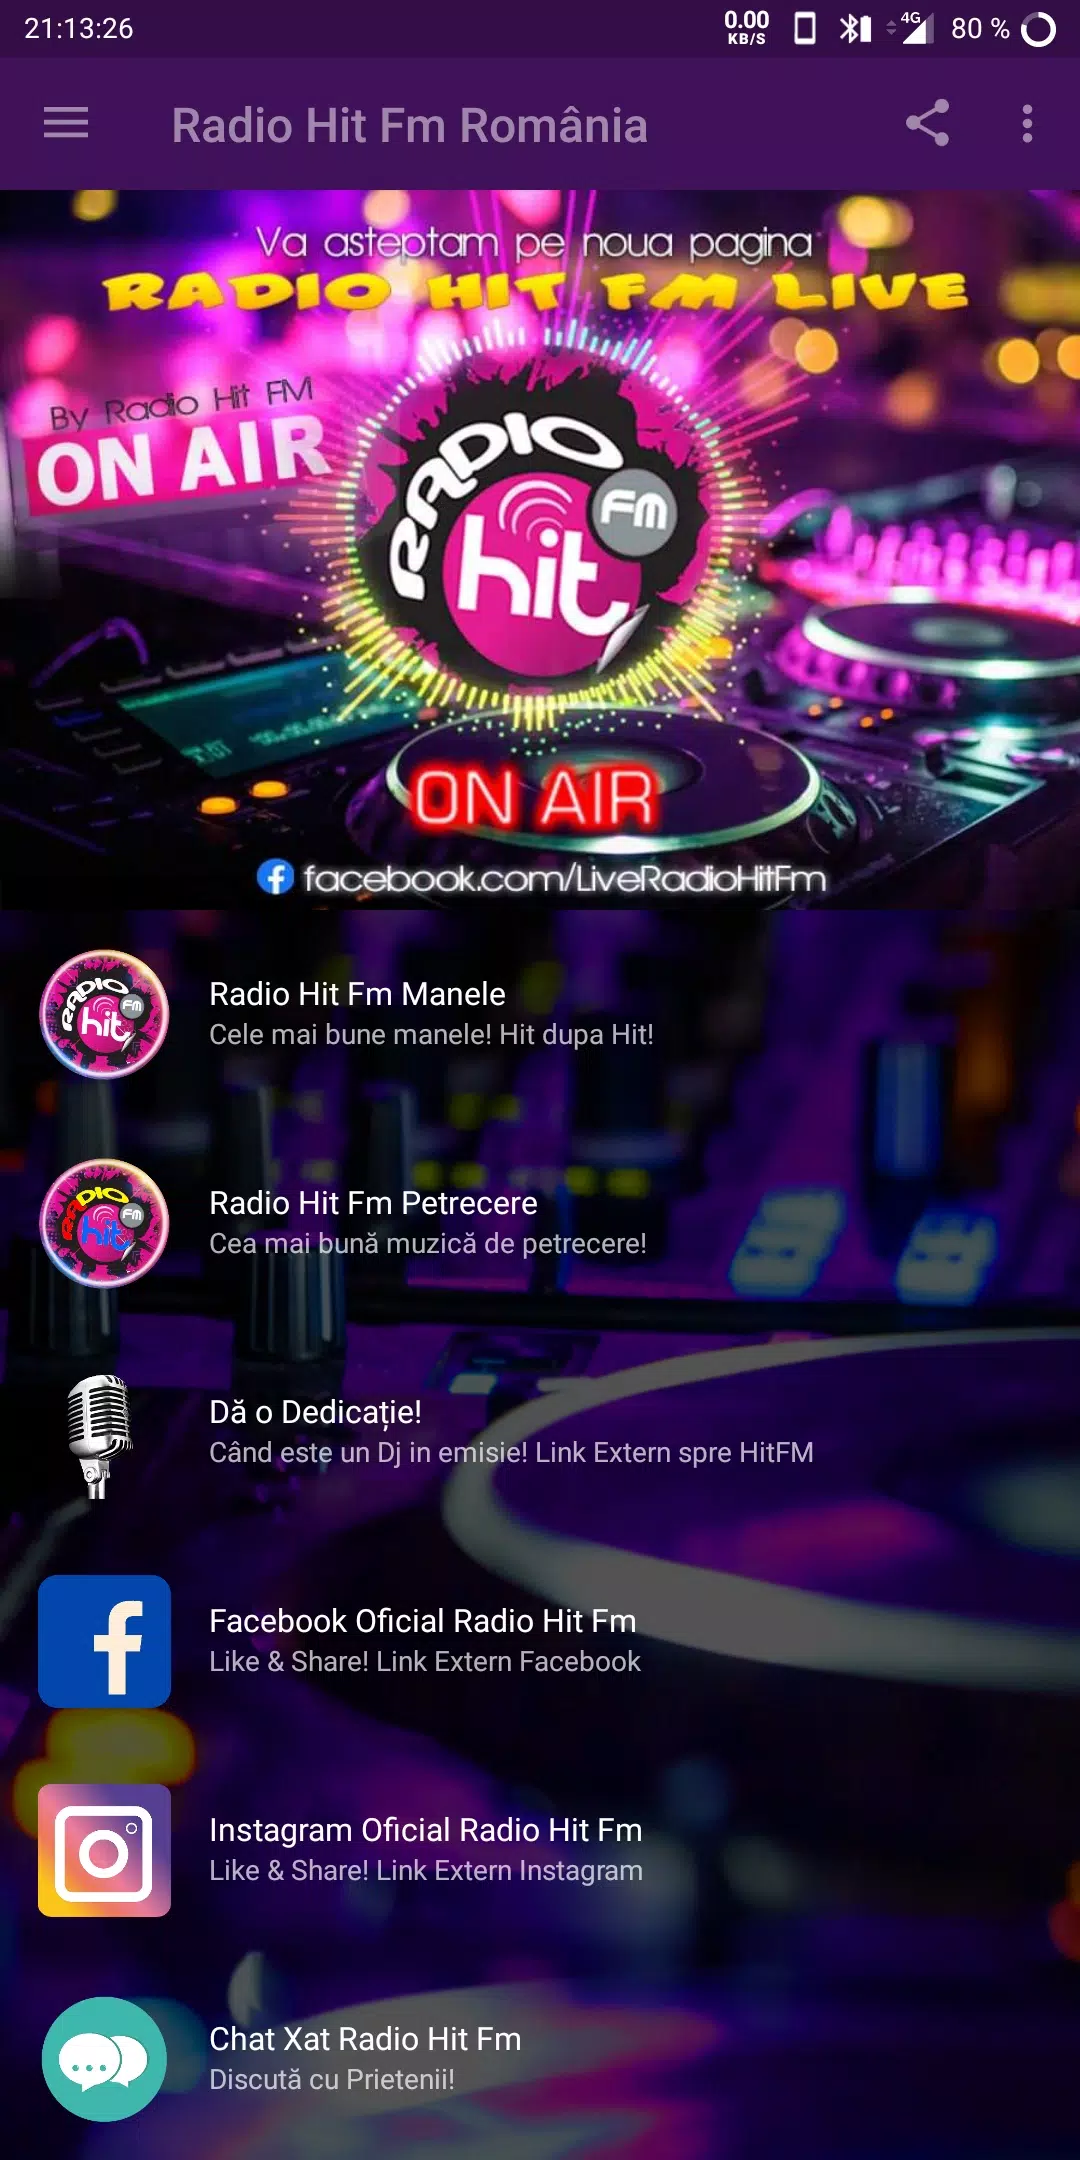 Radio Hit Fm Manele România APK for Android Download